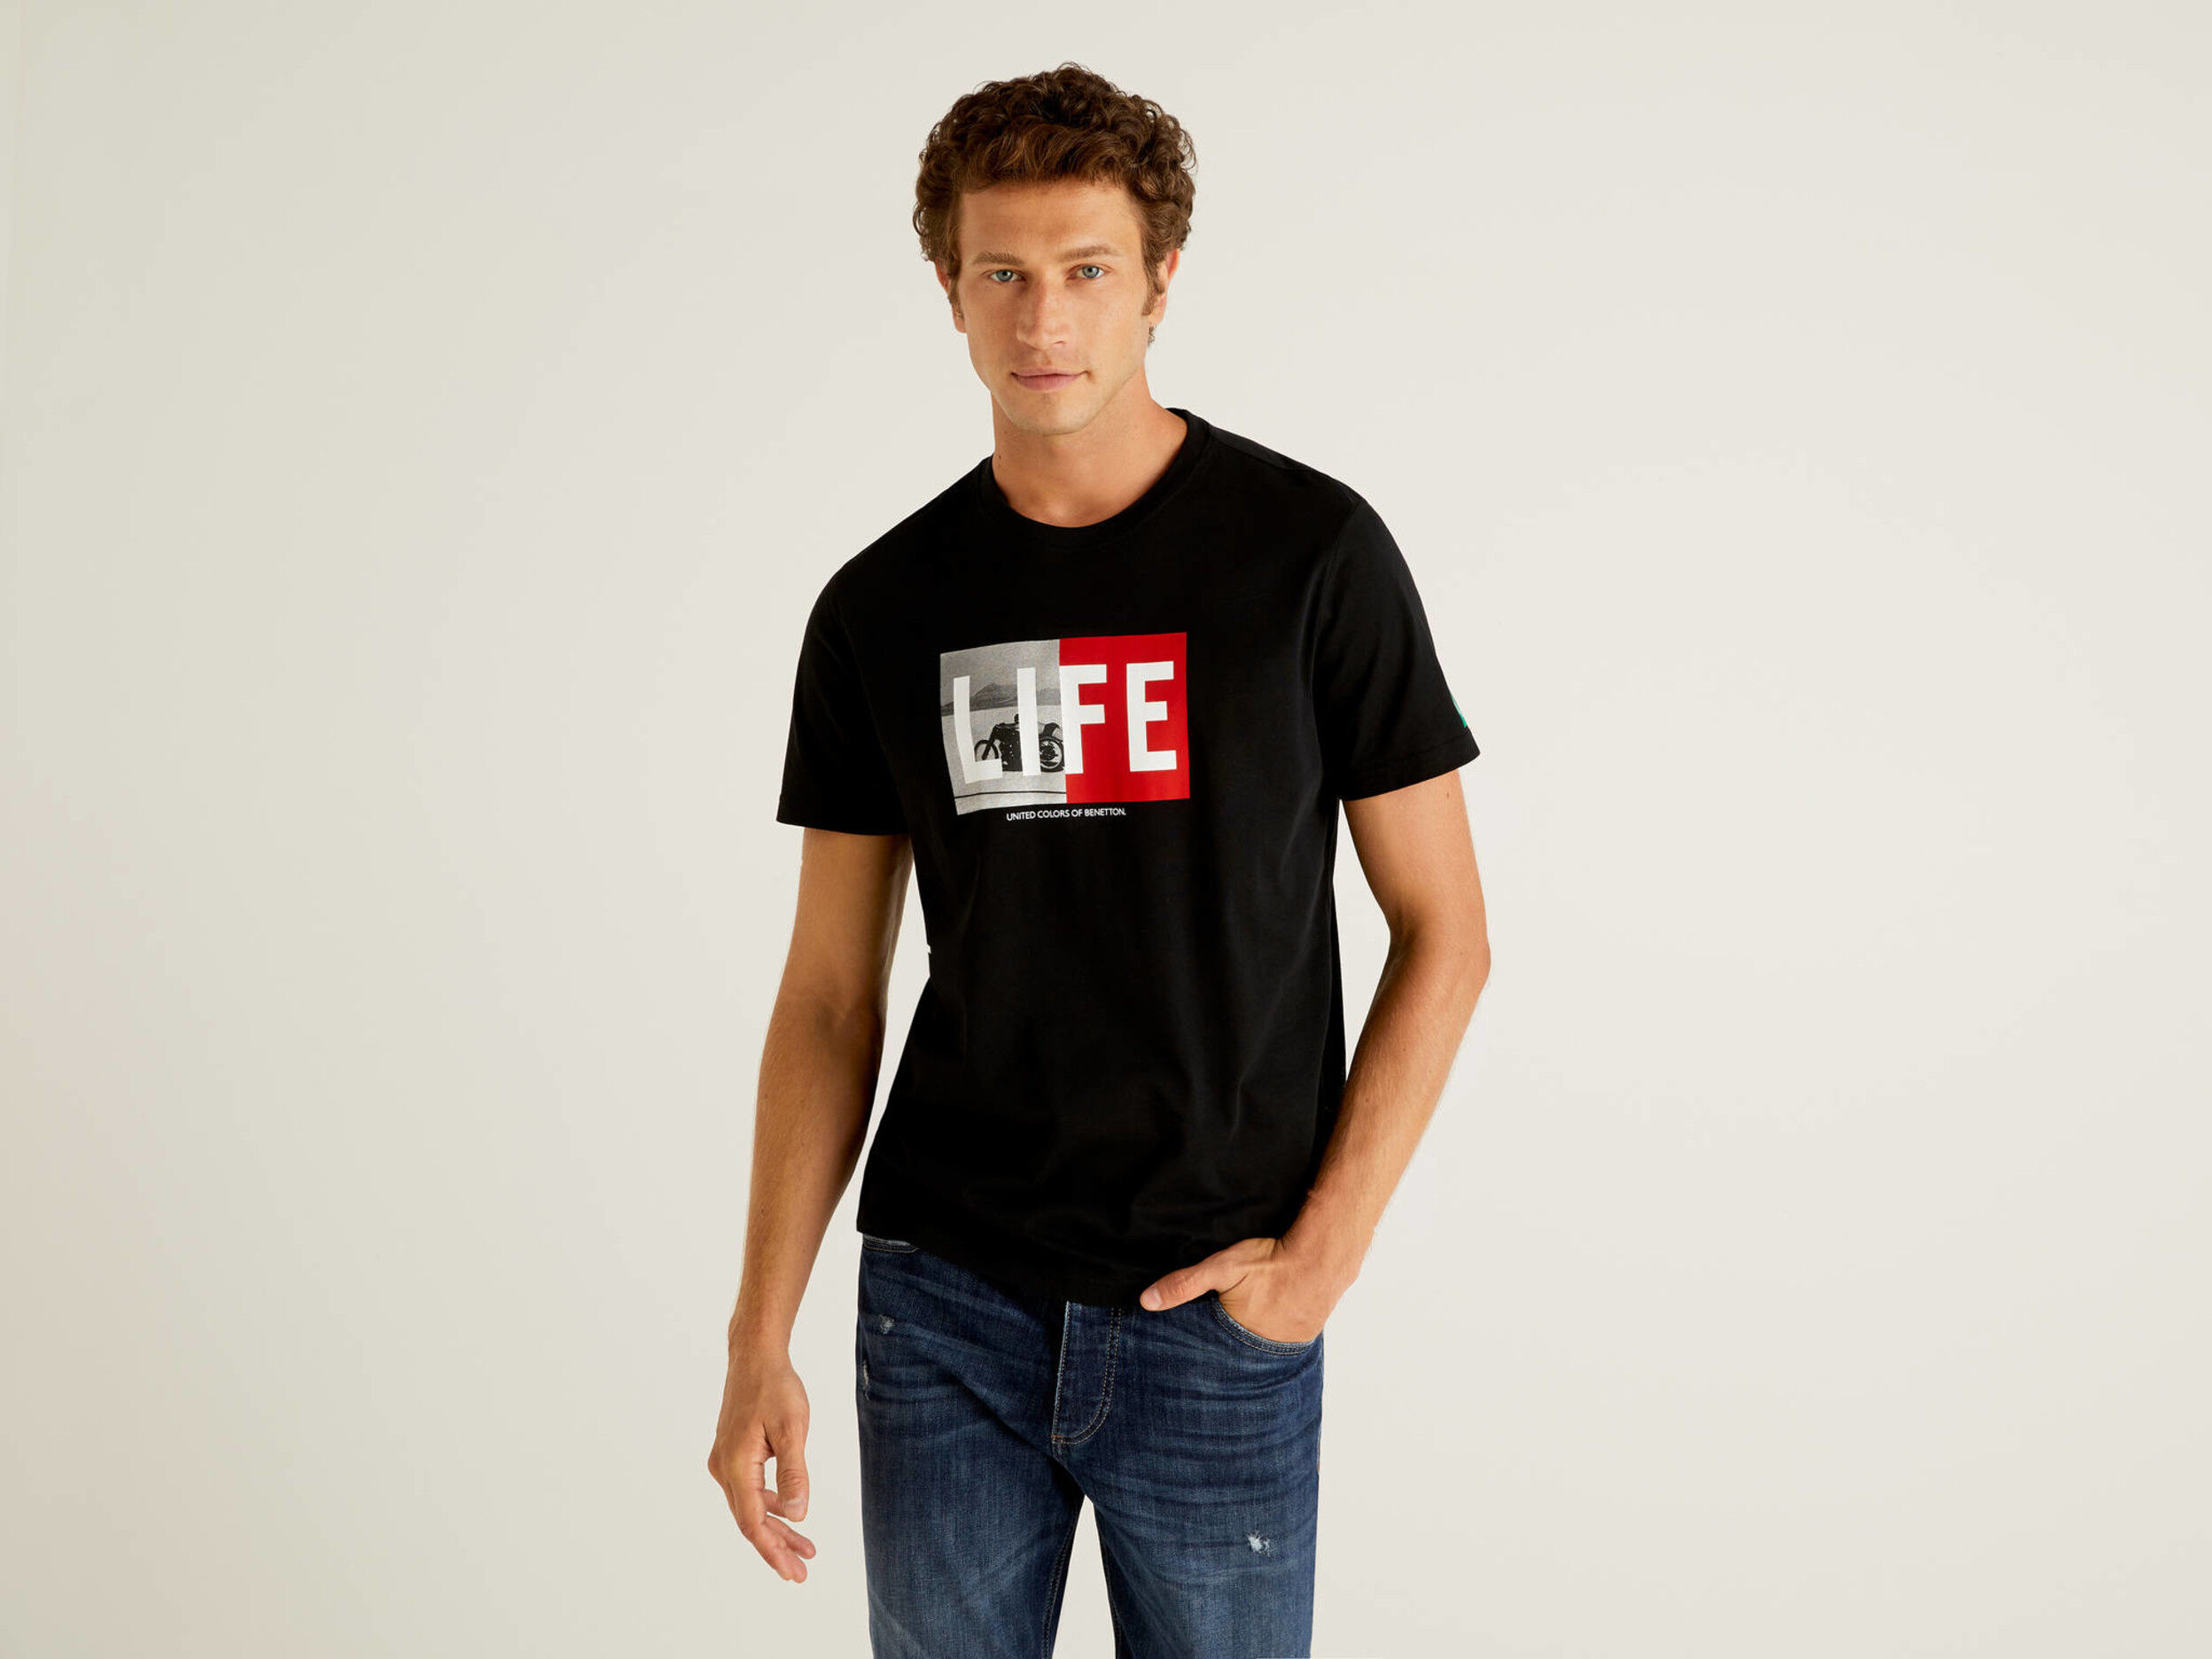 100% organic cotton Life t-shirt